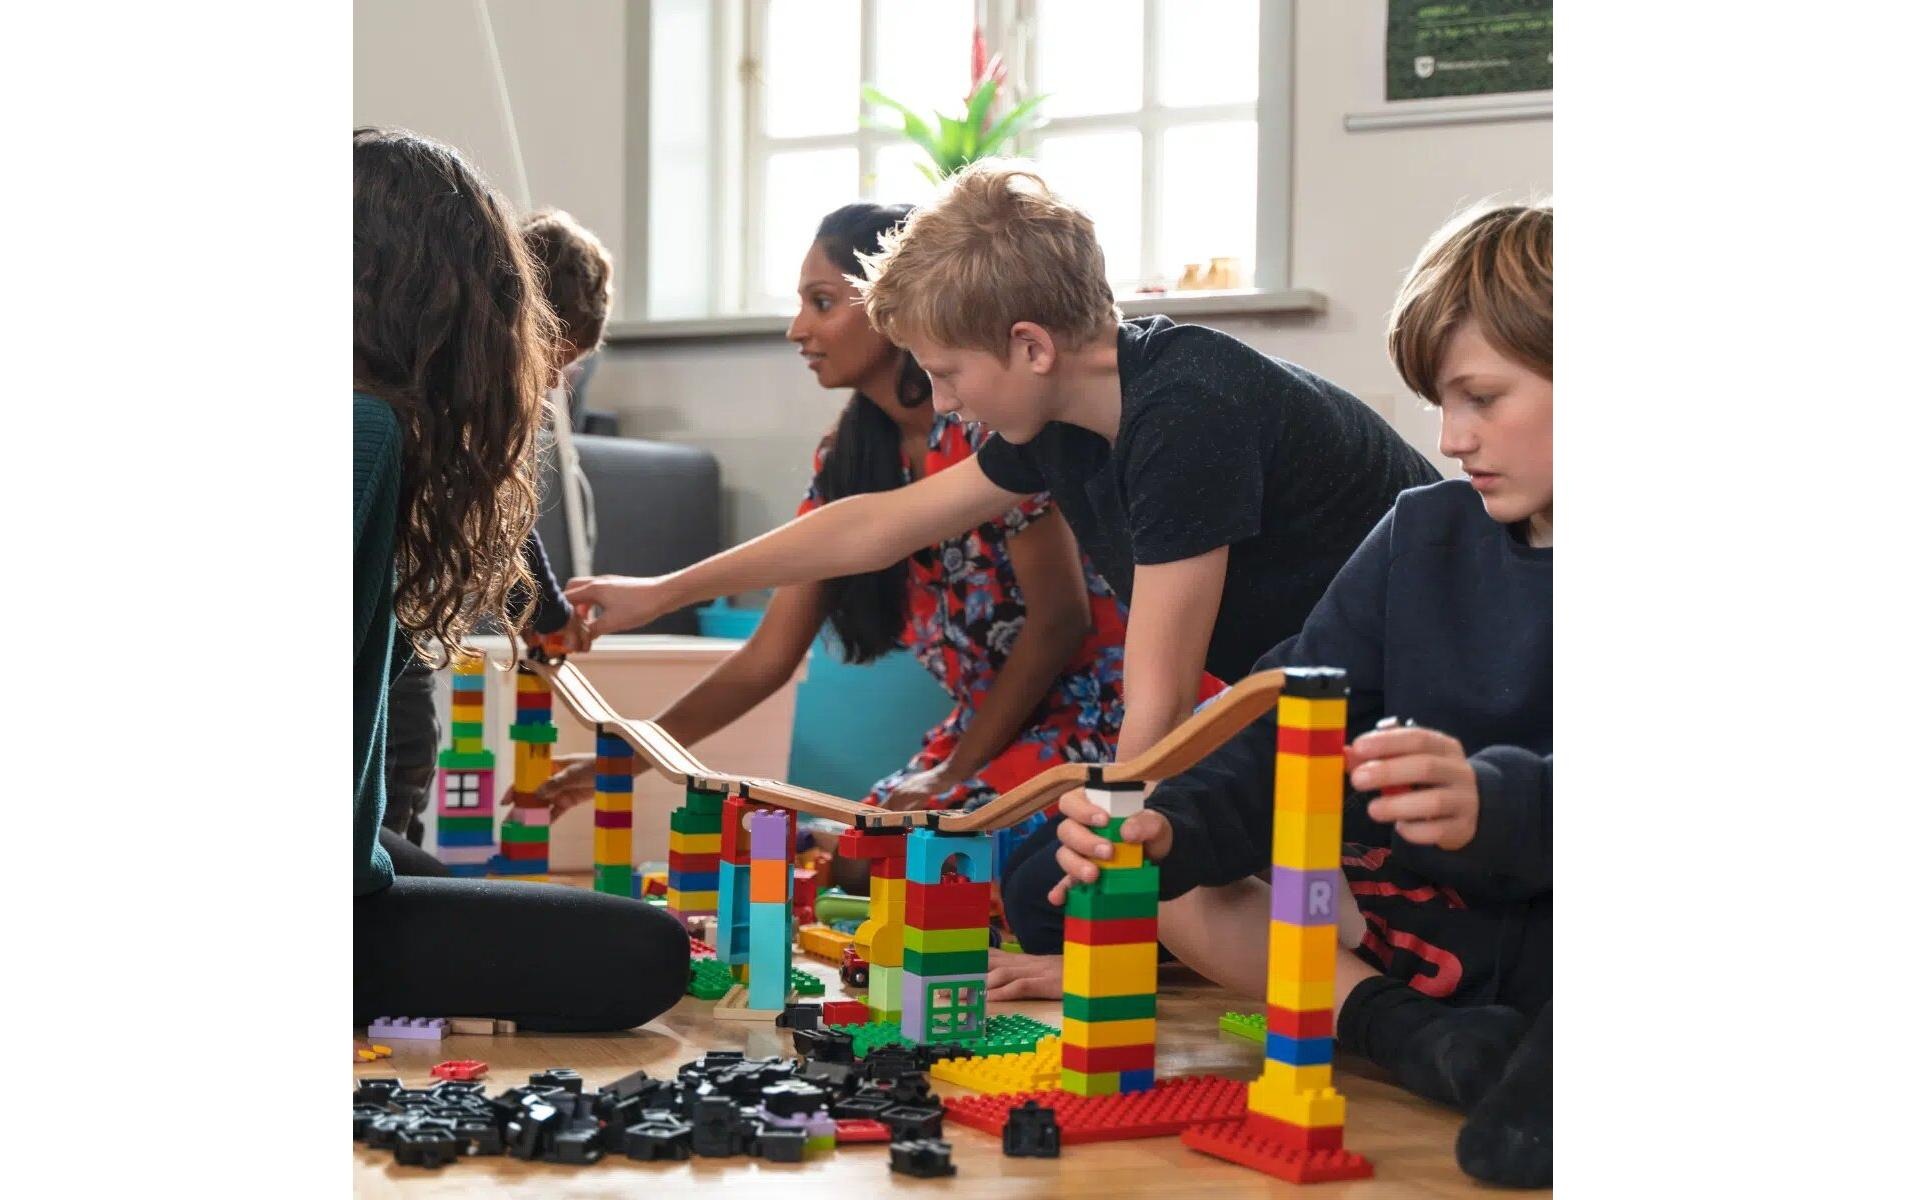 Spielzeugeisenbahn-Kreuzung »Toy2 Builder Set Small«